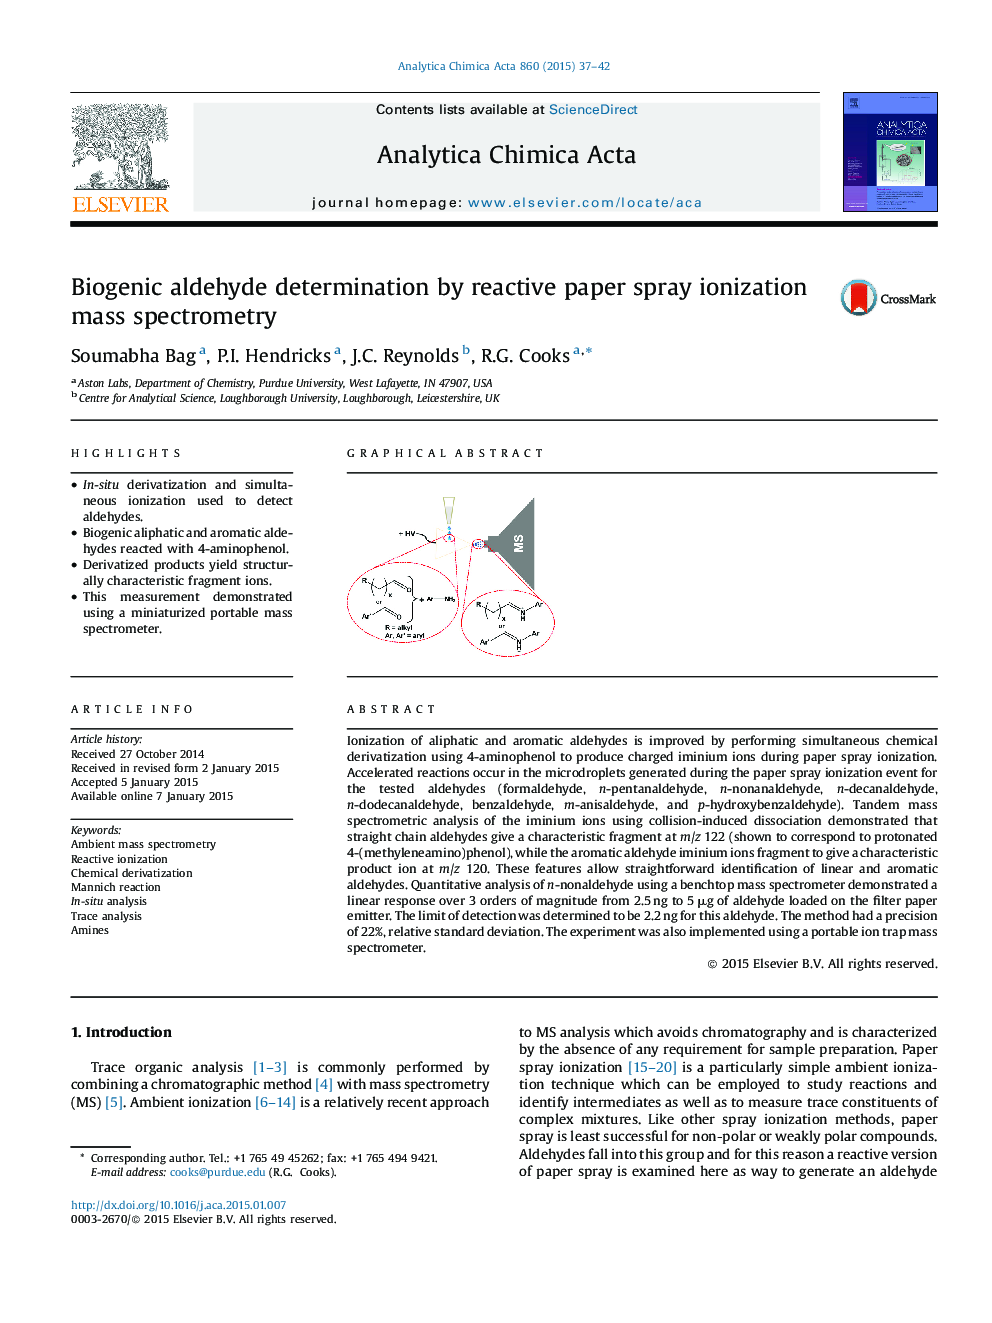 Biogenic aldehyde determination by reactive paper spray ionization mass spectrometry